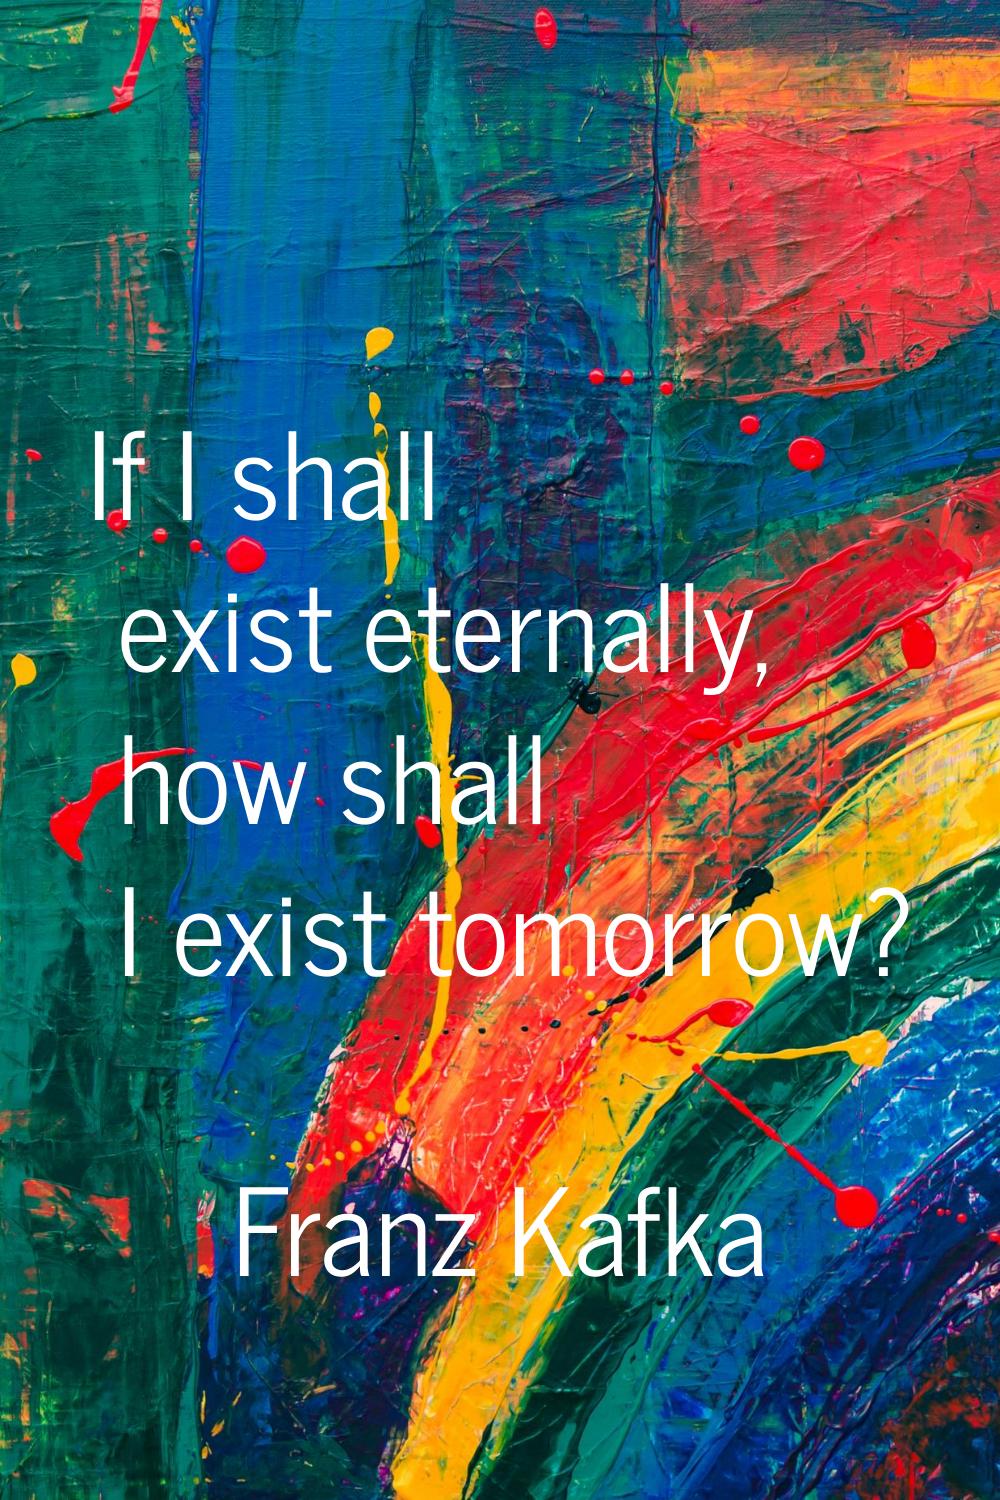 If I shall exist eternally, how shall I exist tomorrow?